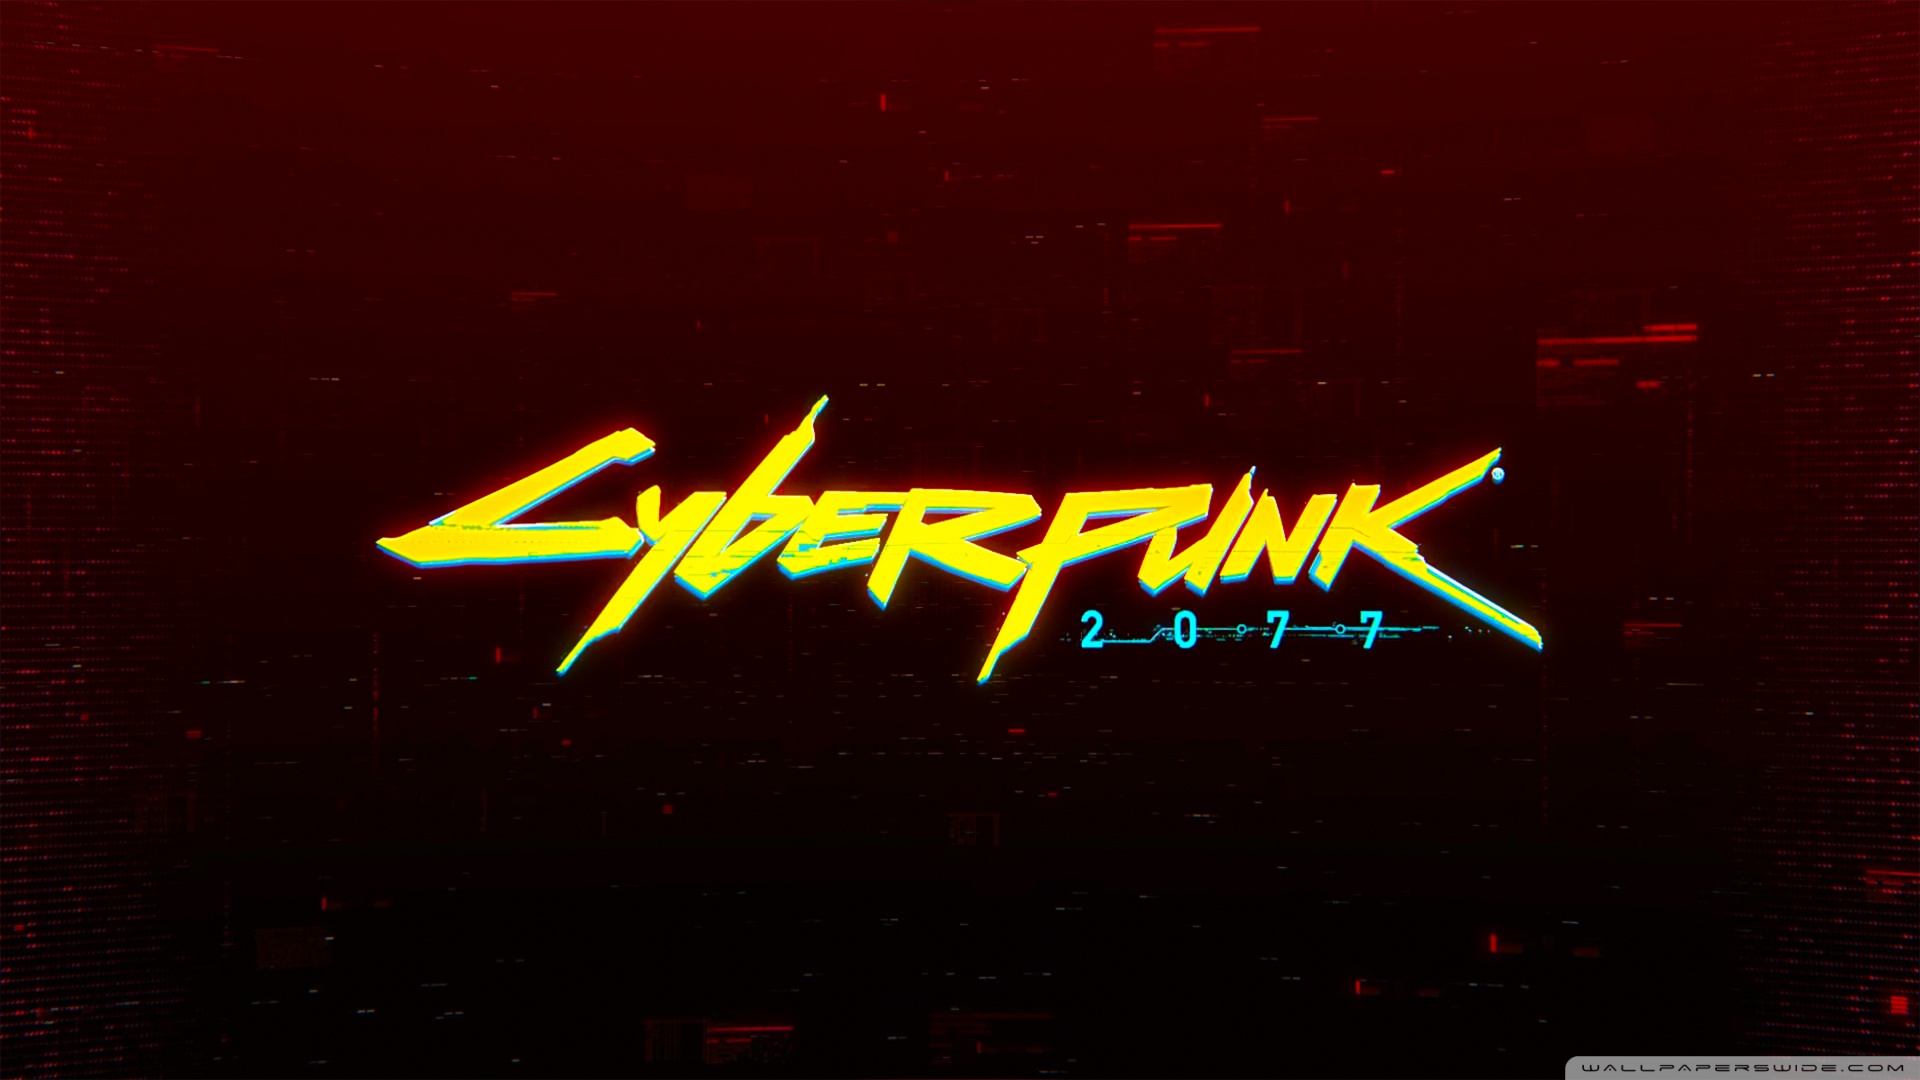 Cyberpunk Full HD, HDTV, 1080p 16:9 Wallpapers, HD Cyberpunk